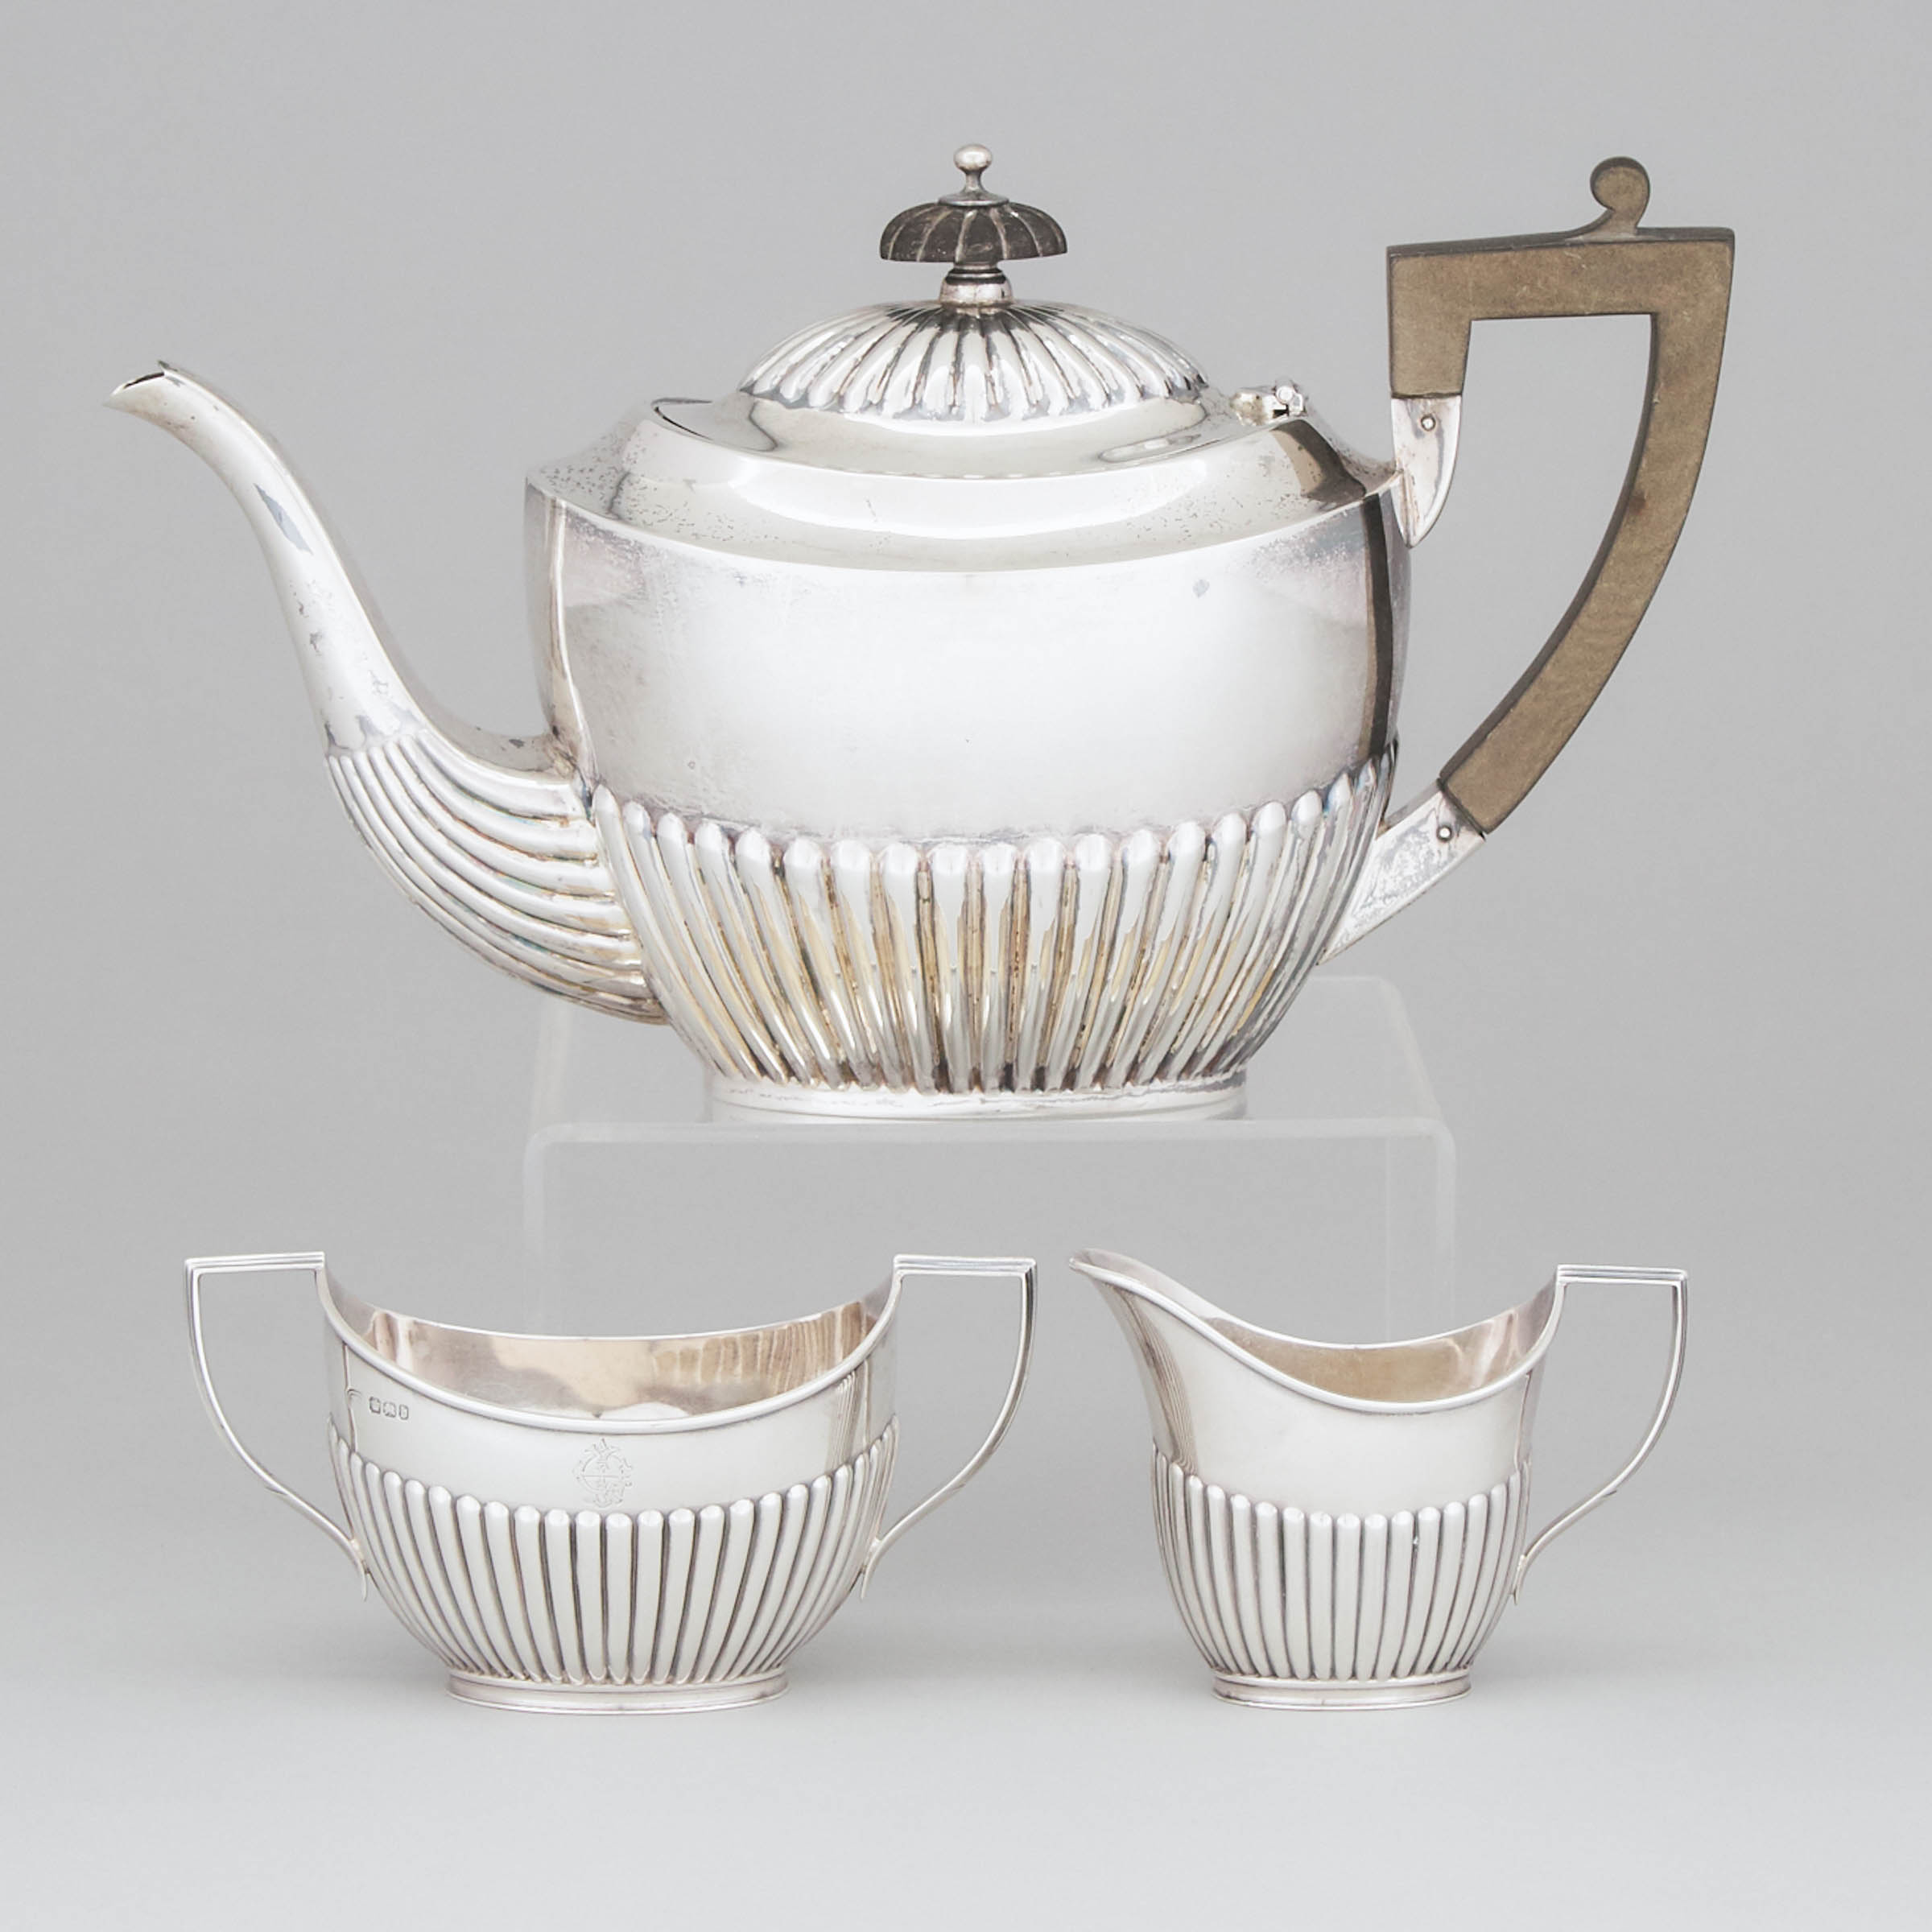 Canadian Silver Tea Service, Toronto Silver Plate Co., Toronto, Ont., c.1900